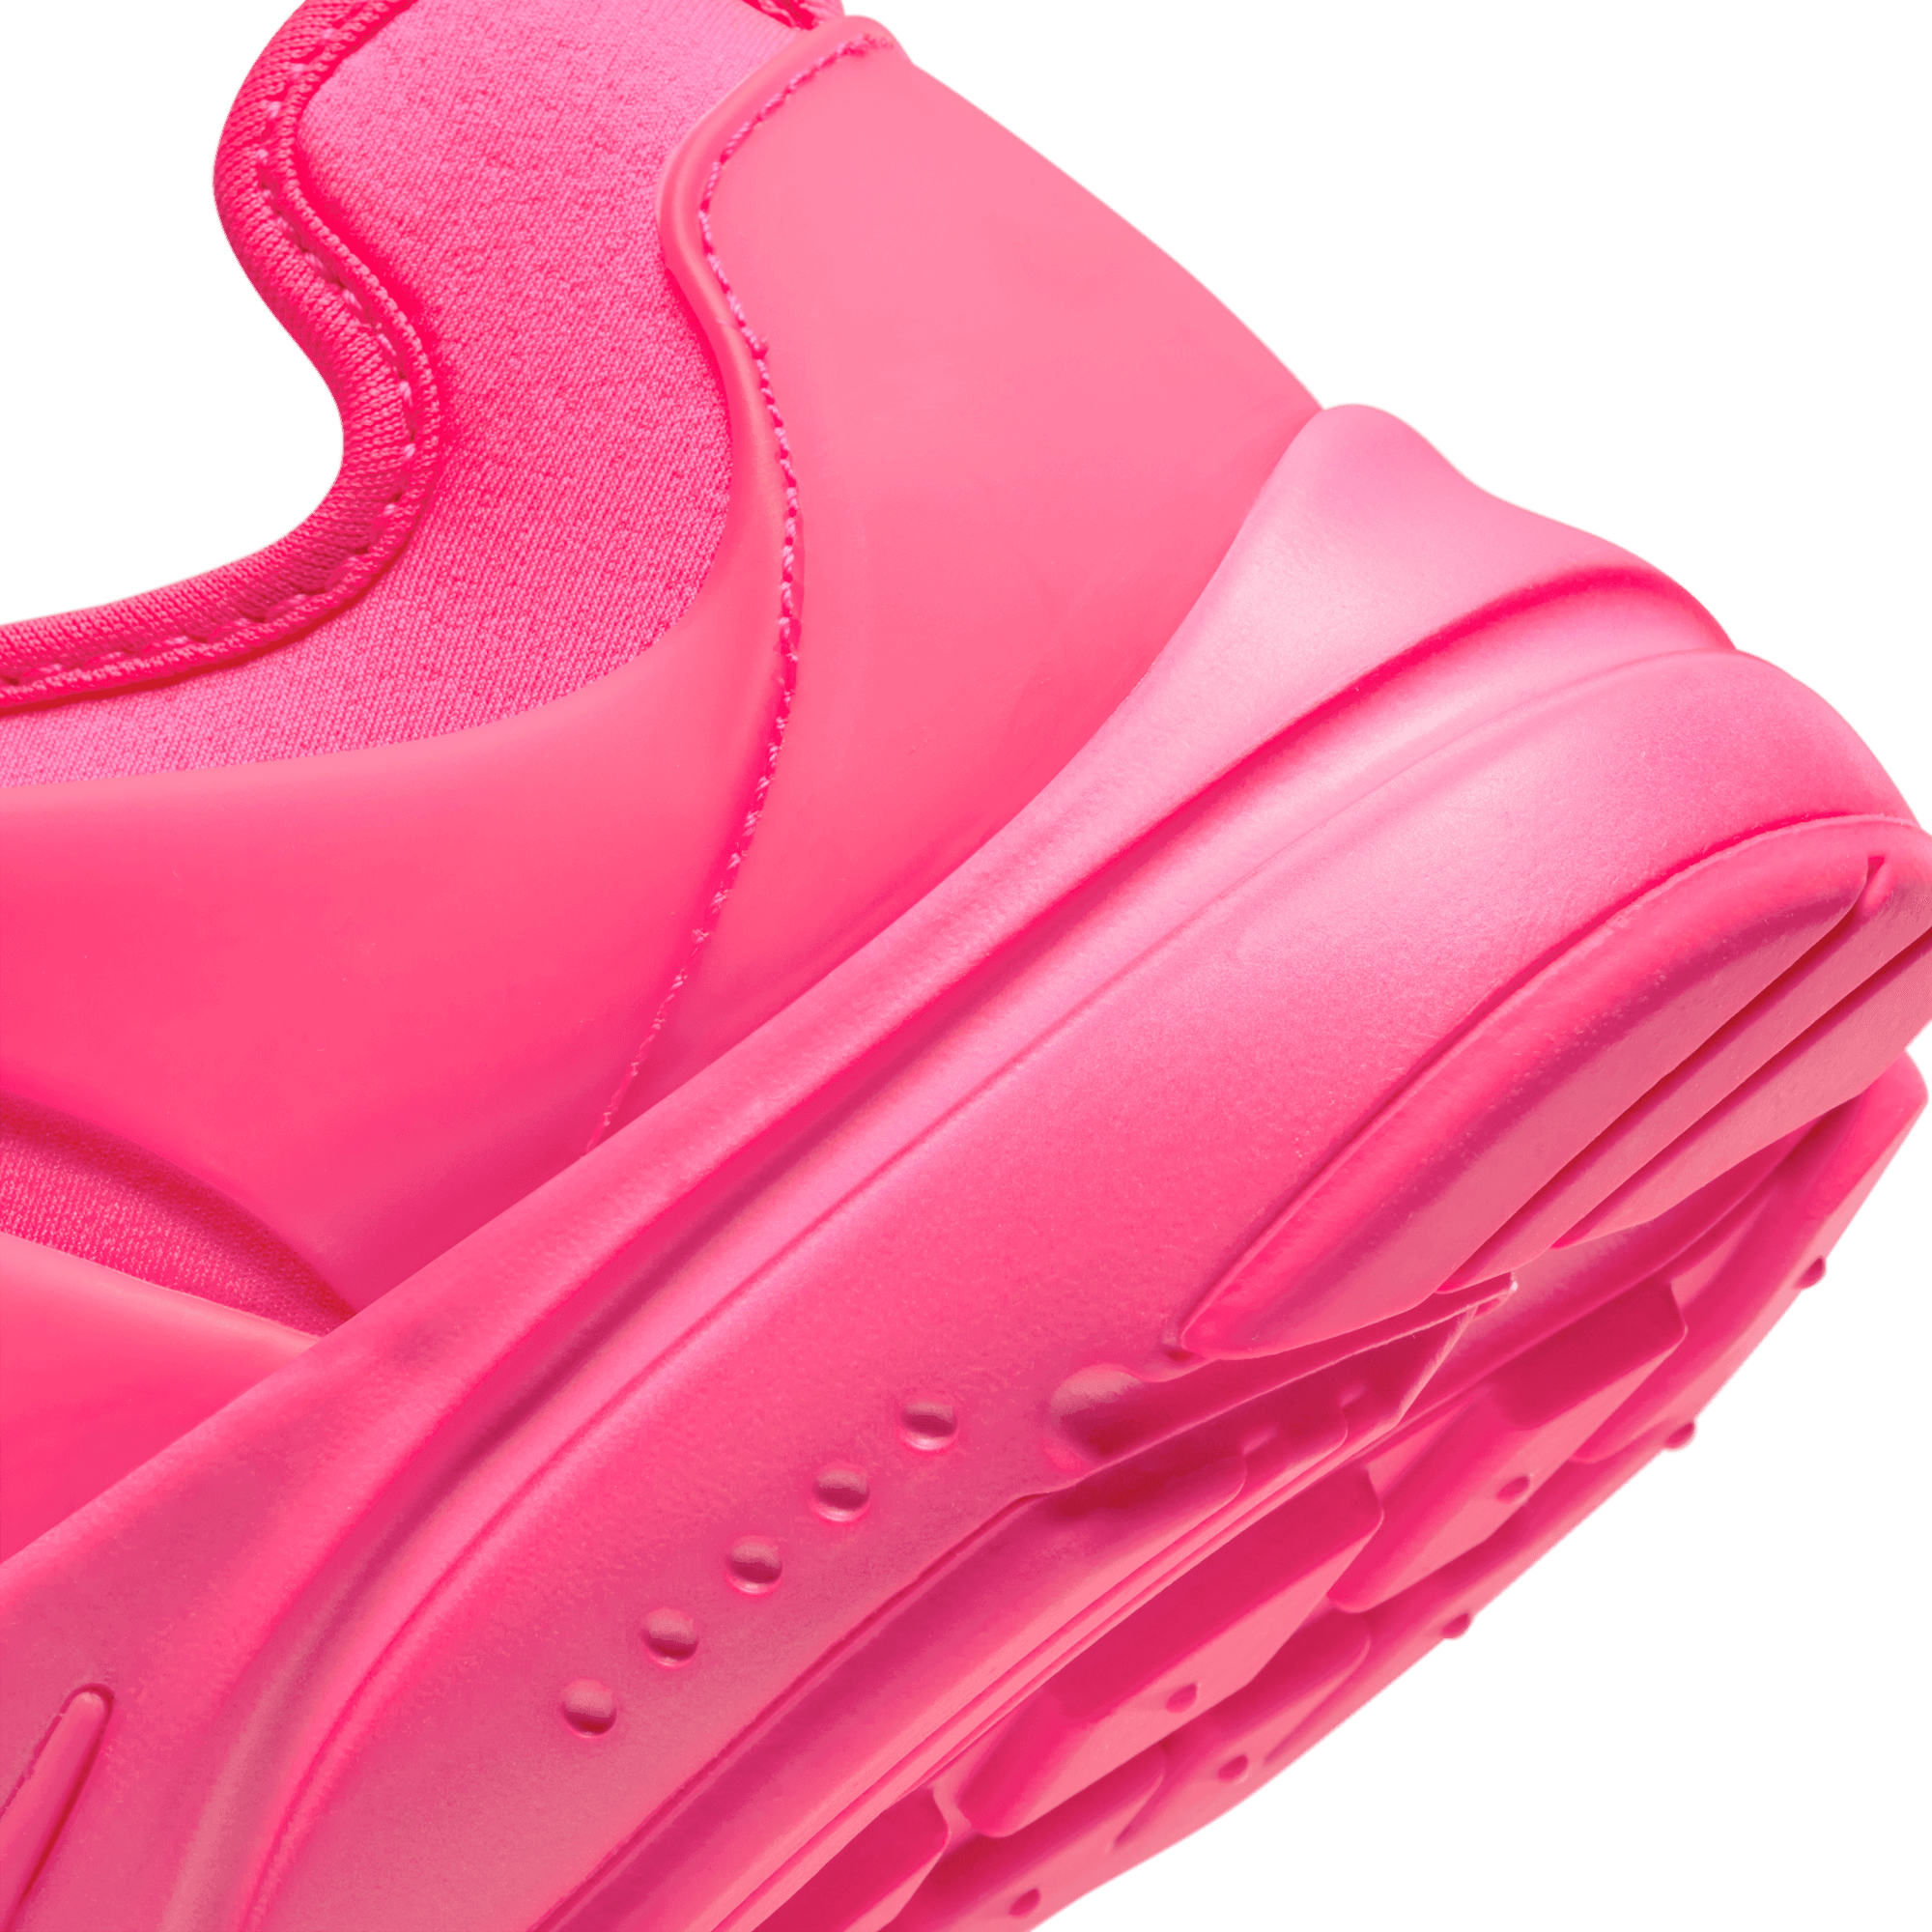 Nike Footwear Nike Air Presto - Women's